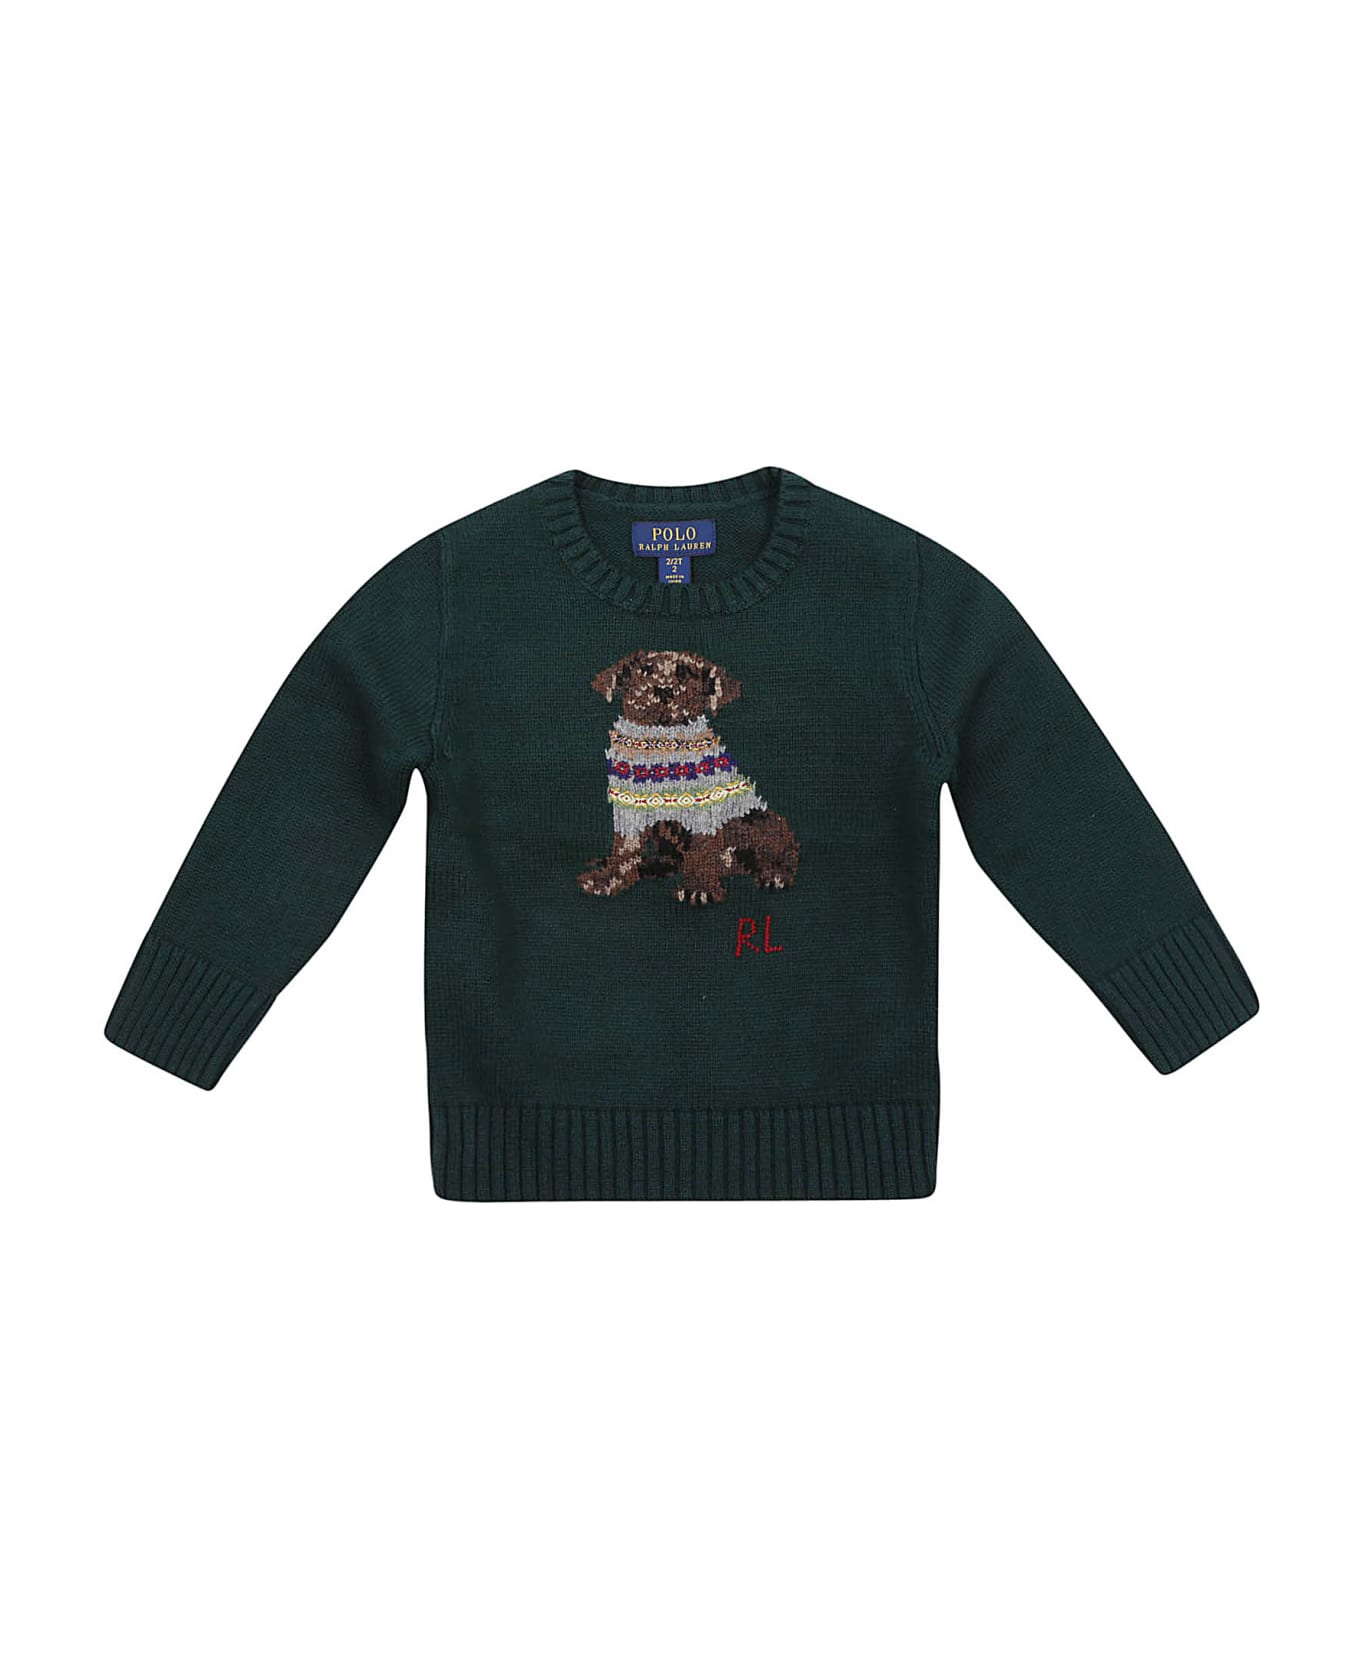 Ralph Lauren Ls Cn Dog-sweater-pullover - Hunt Club Green